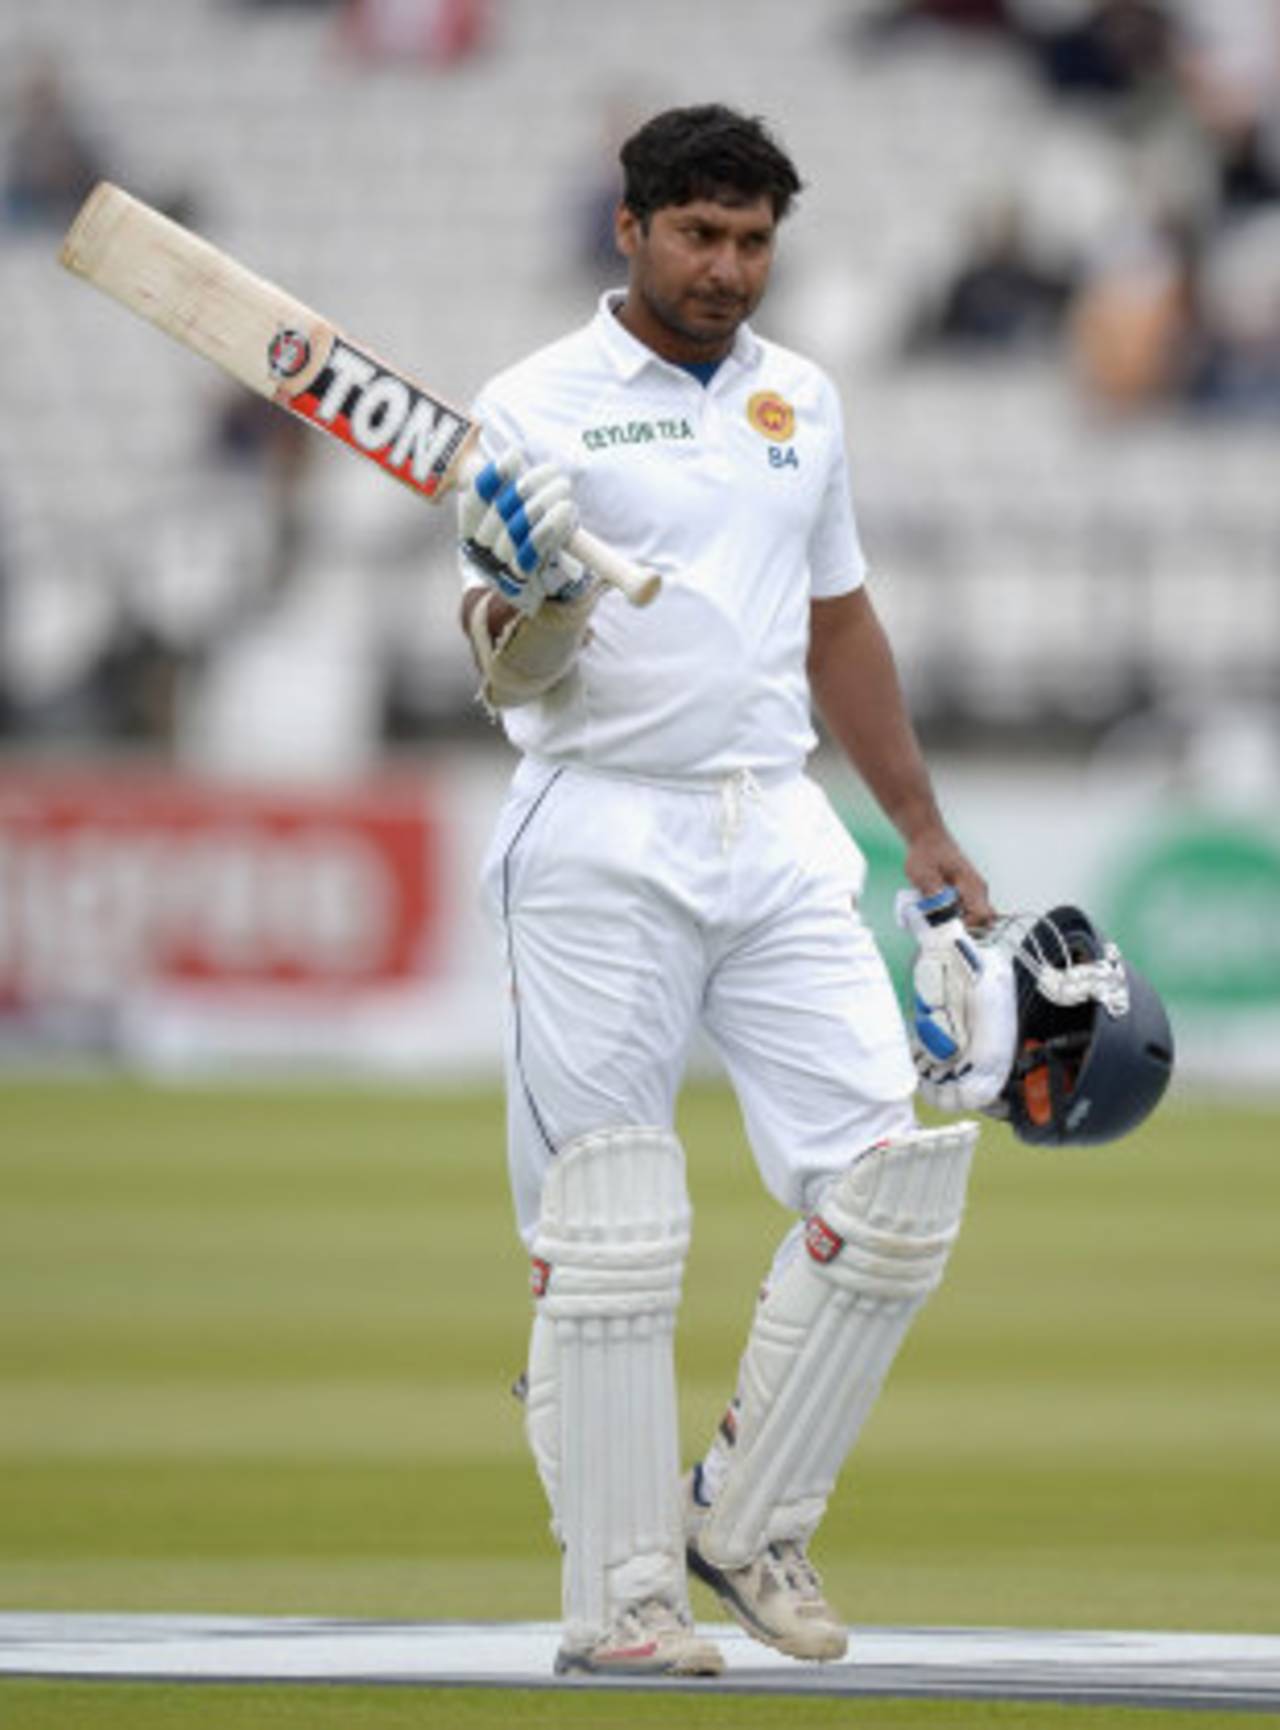 Without Kumar Sangakkara in this Test, Sri Lanka were done for&nbsp;&nbsp;&bull;&nbsp;&nbsp;Getty Images